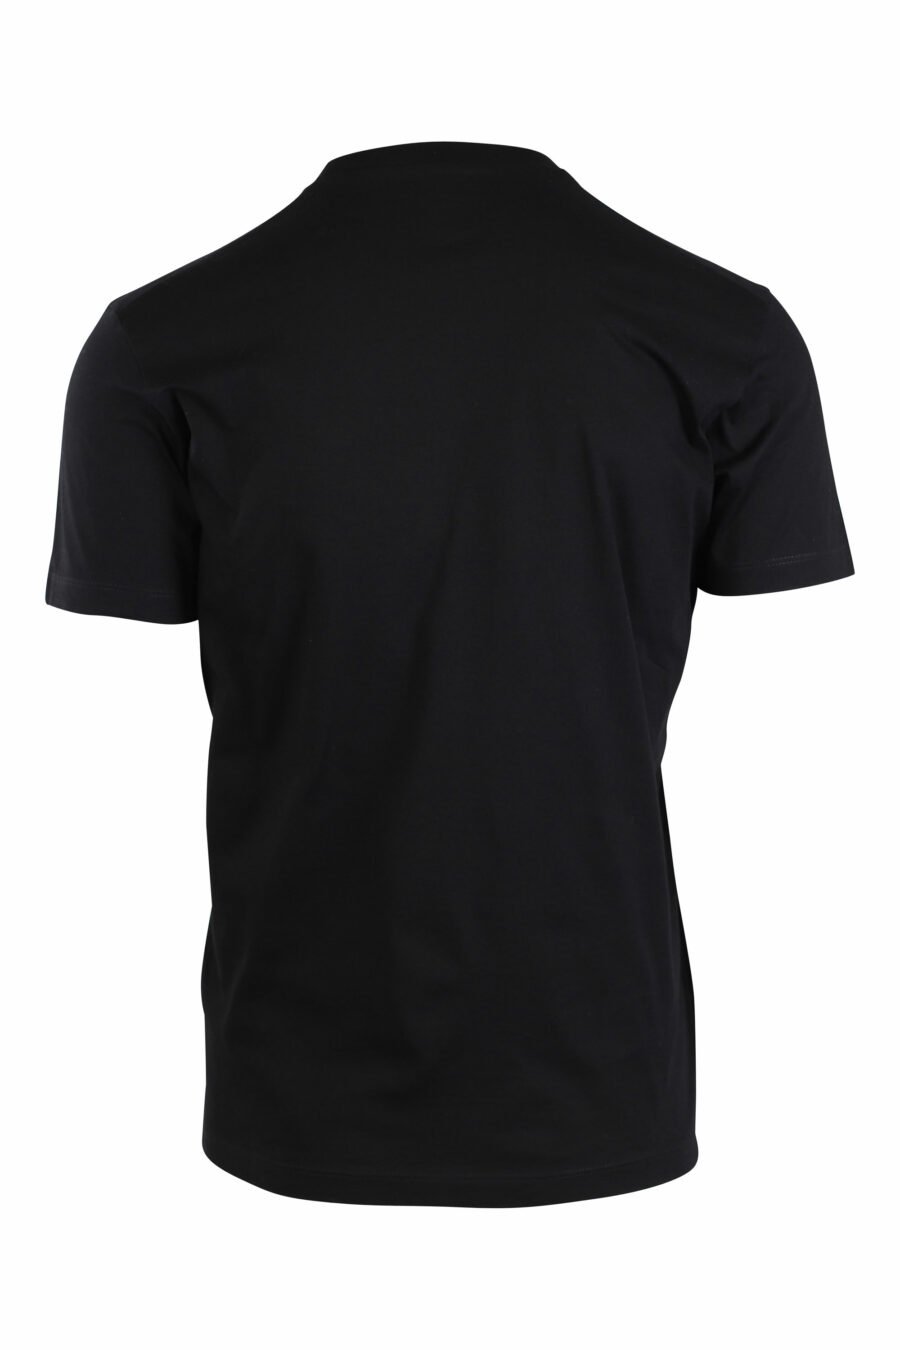 T-Shirt schwarz mit fröhlichem grünem Blatt-Logo - IMG 2674